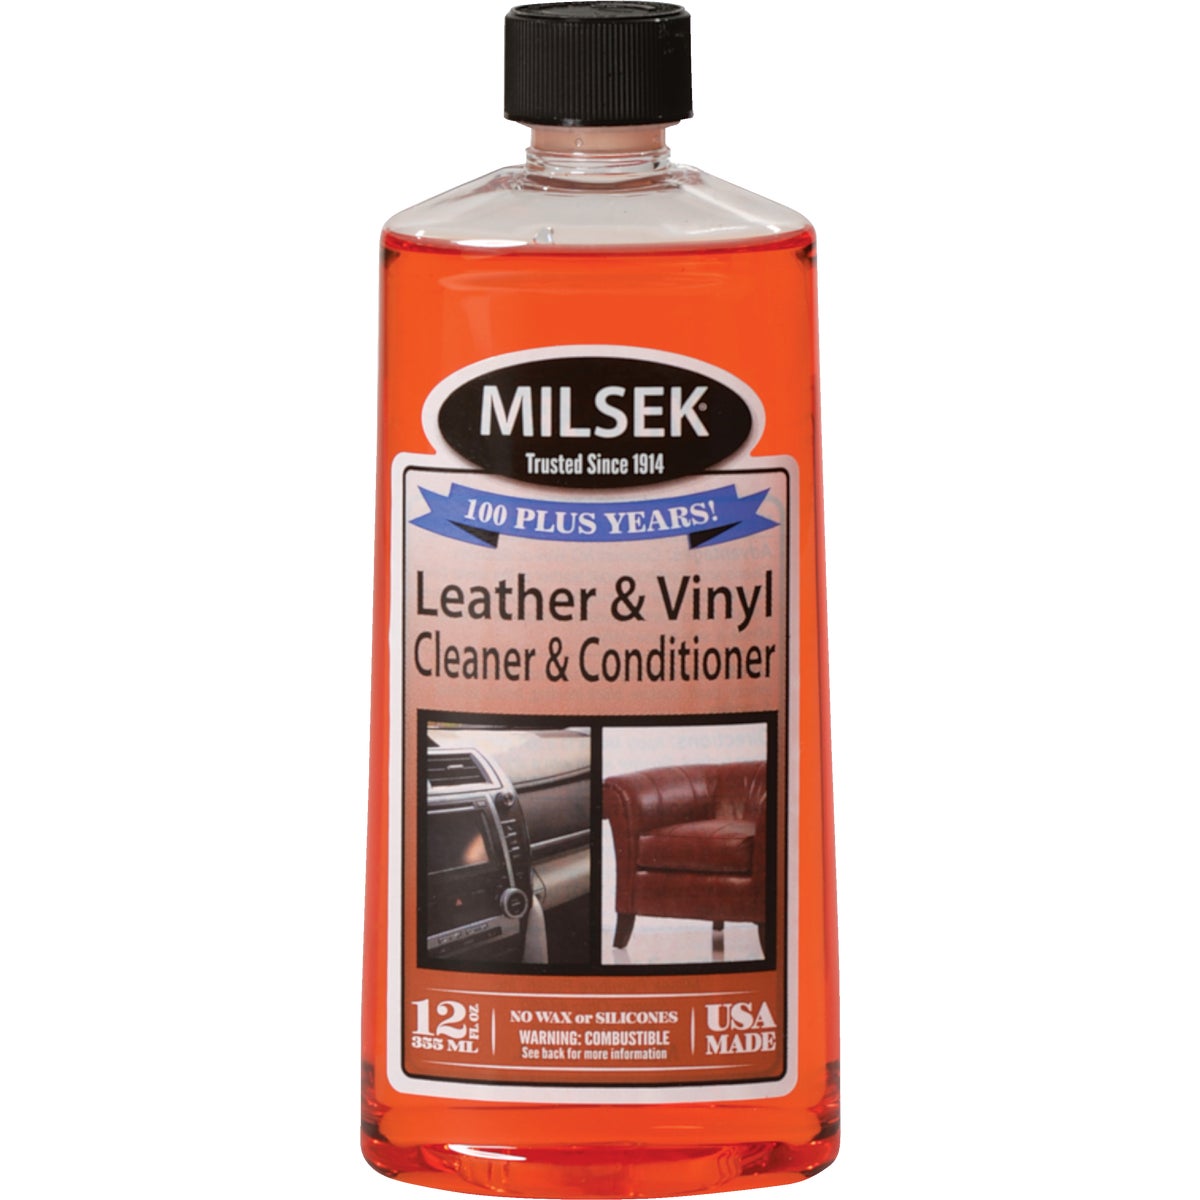 Milsek 12 Oz. Leather & Vinyl Cleaner & Conditioner